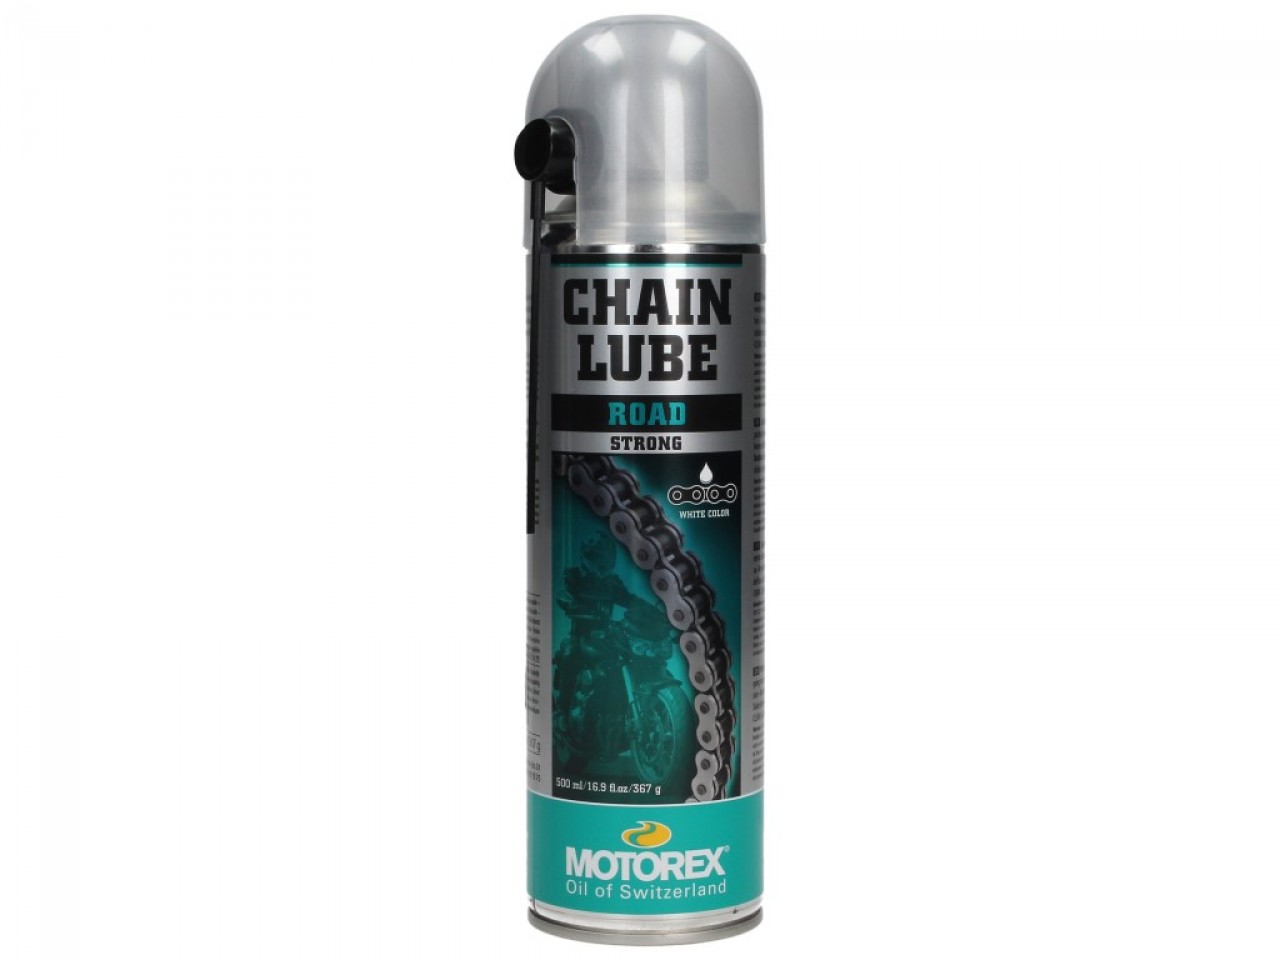 Motorex Chainlube Road Strong Chain Spray 500ml